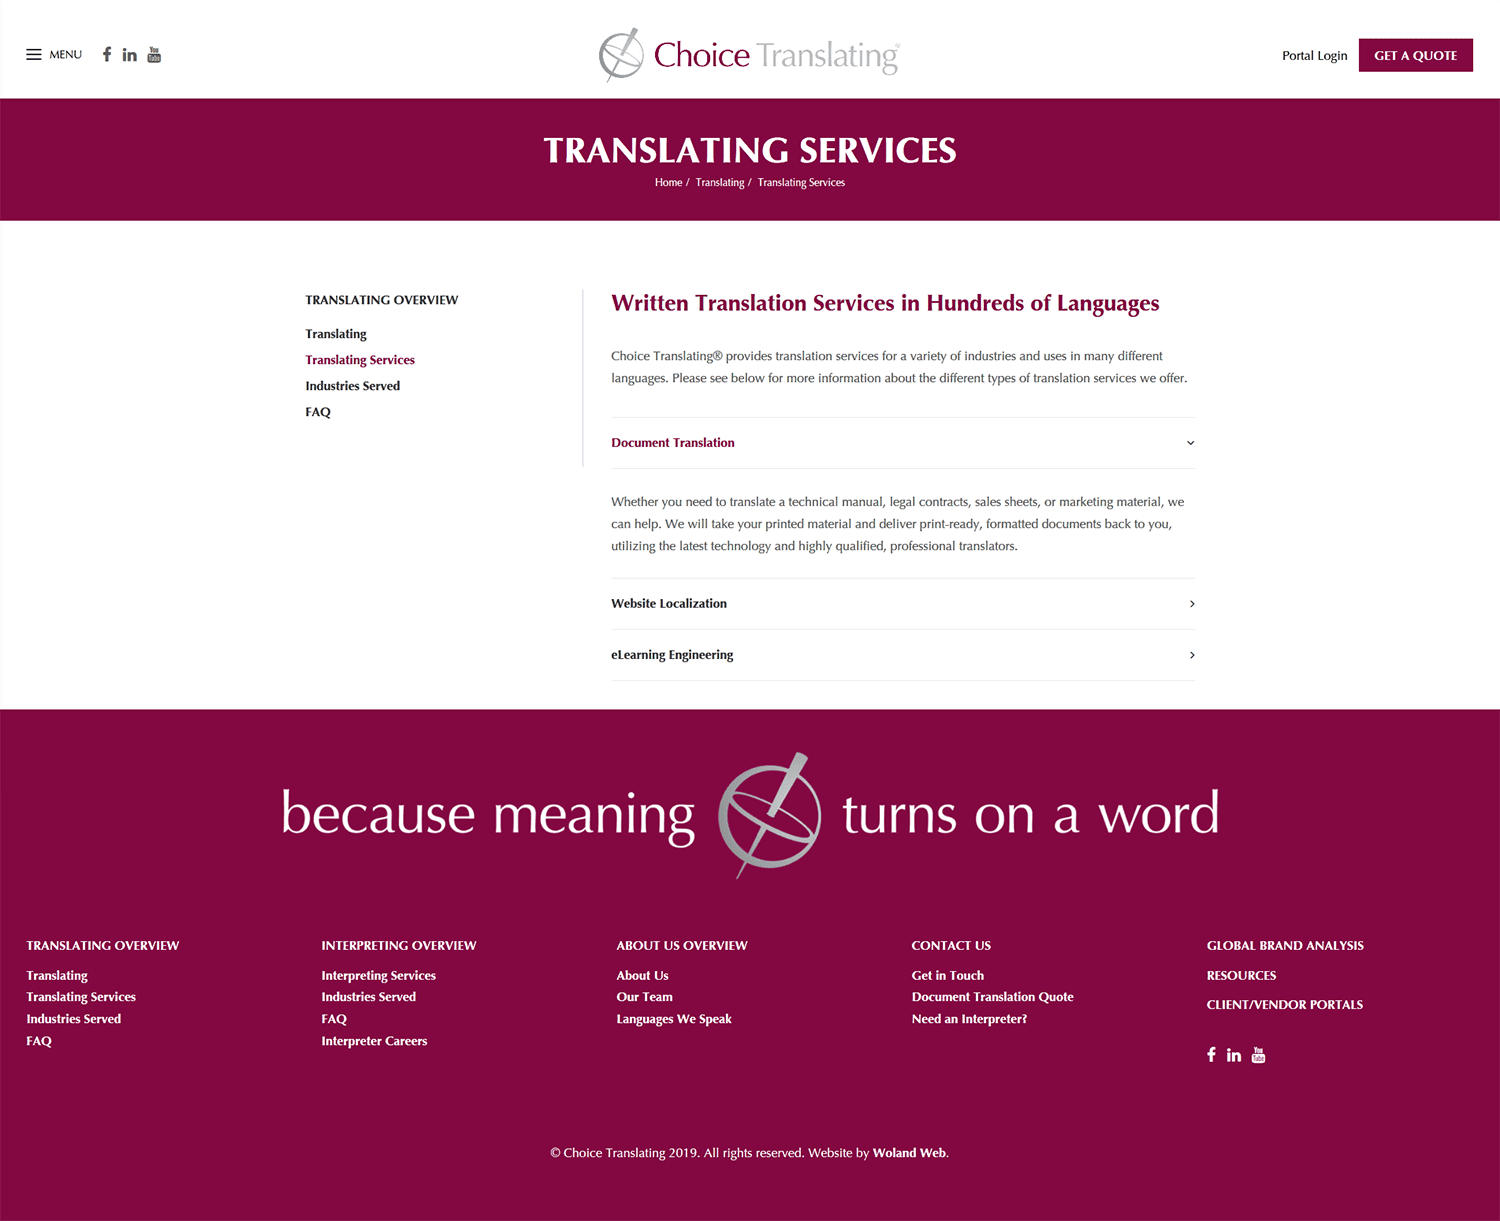 Choice Translating website translating services page screenshot